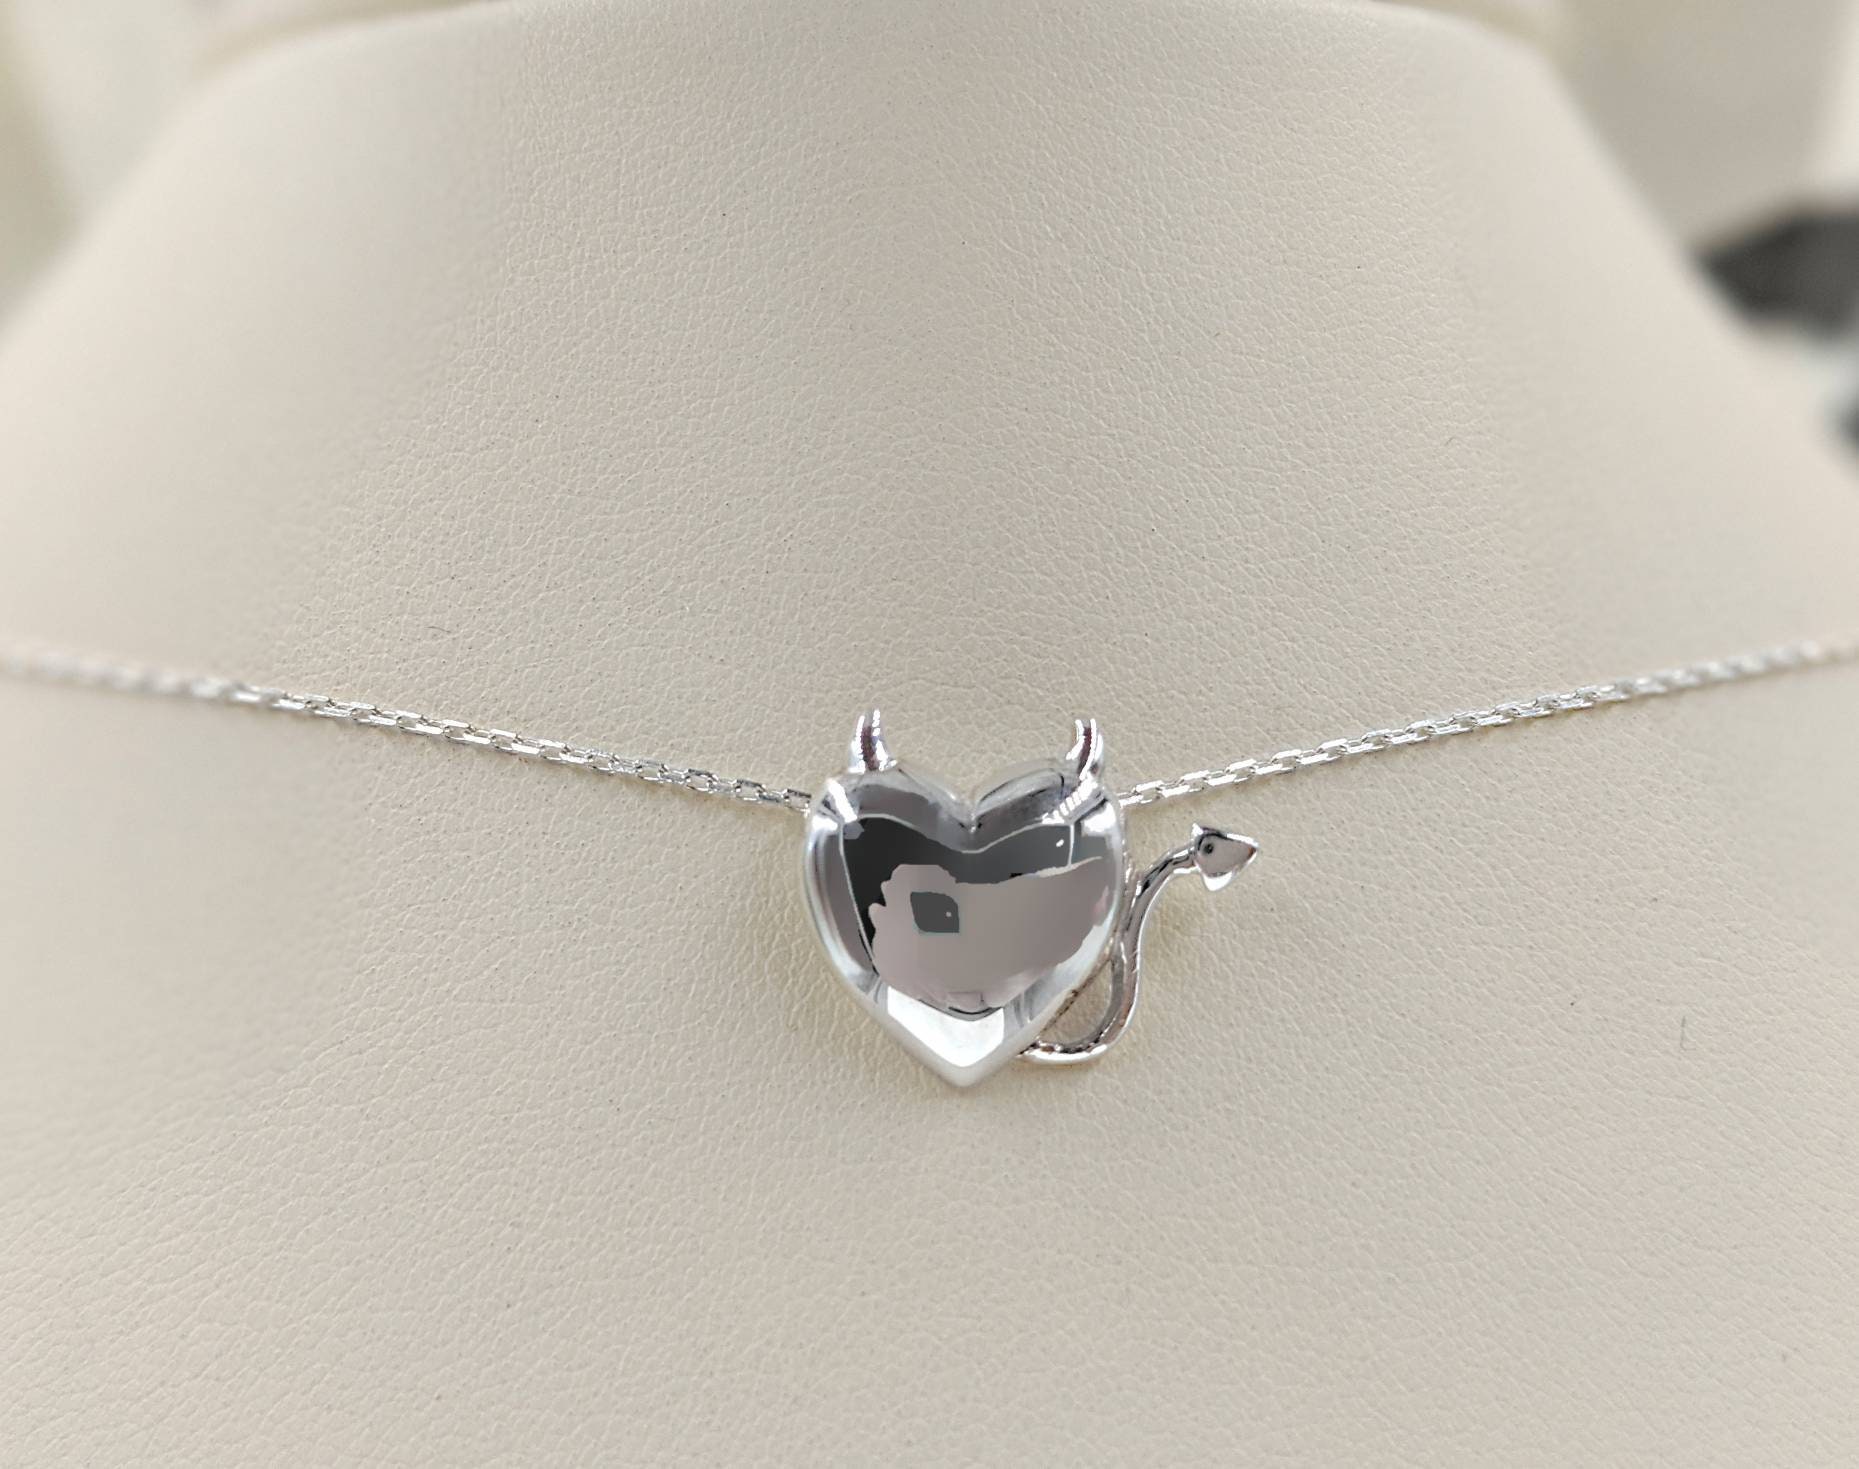 Buy Necklace shorteners online : Sterling silver 925 necklace shortener 13  mm - Com-forsa S.L.